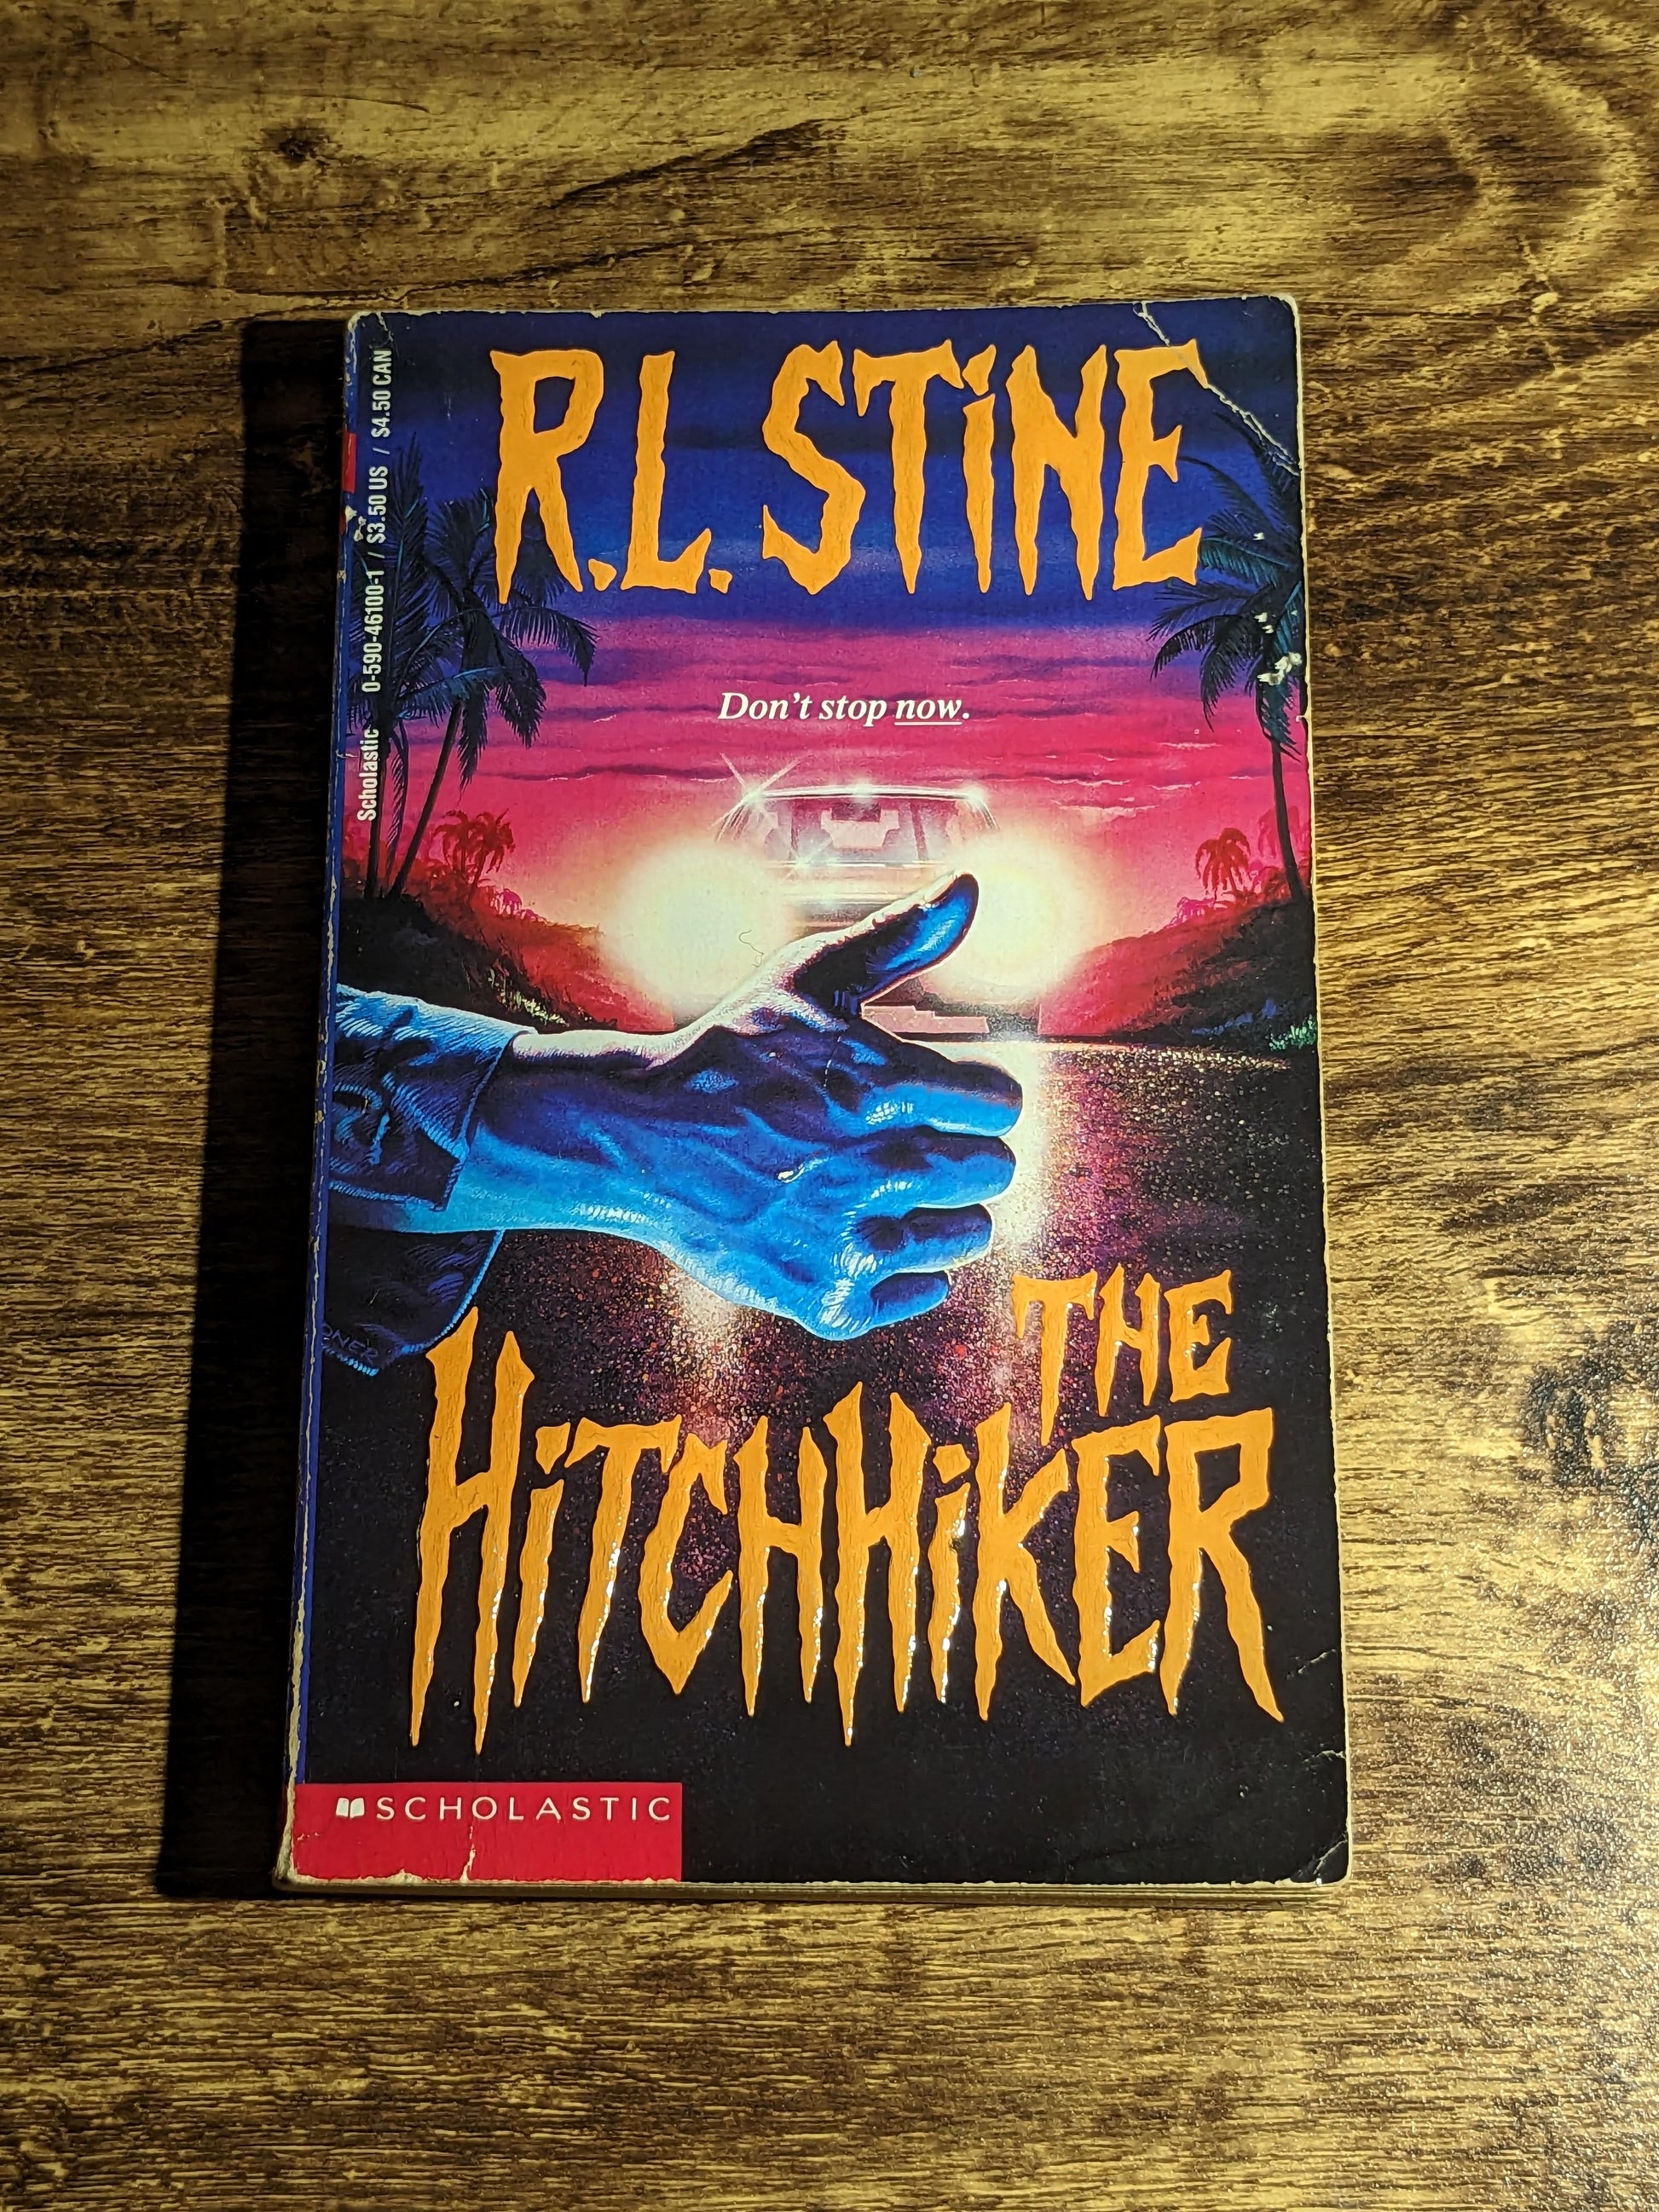 HITCHHIKER, THE - Vintage RL Stine Horror Paperback, 90s Teen Point Horror Thriller, Bestselling Novel, Spooky Scary Halloween Gift Throwback - Asylum Books